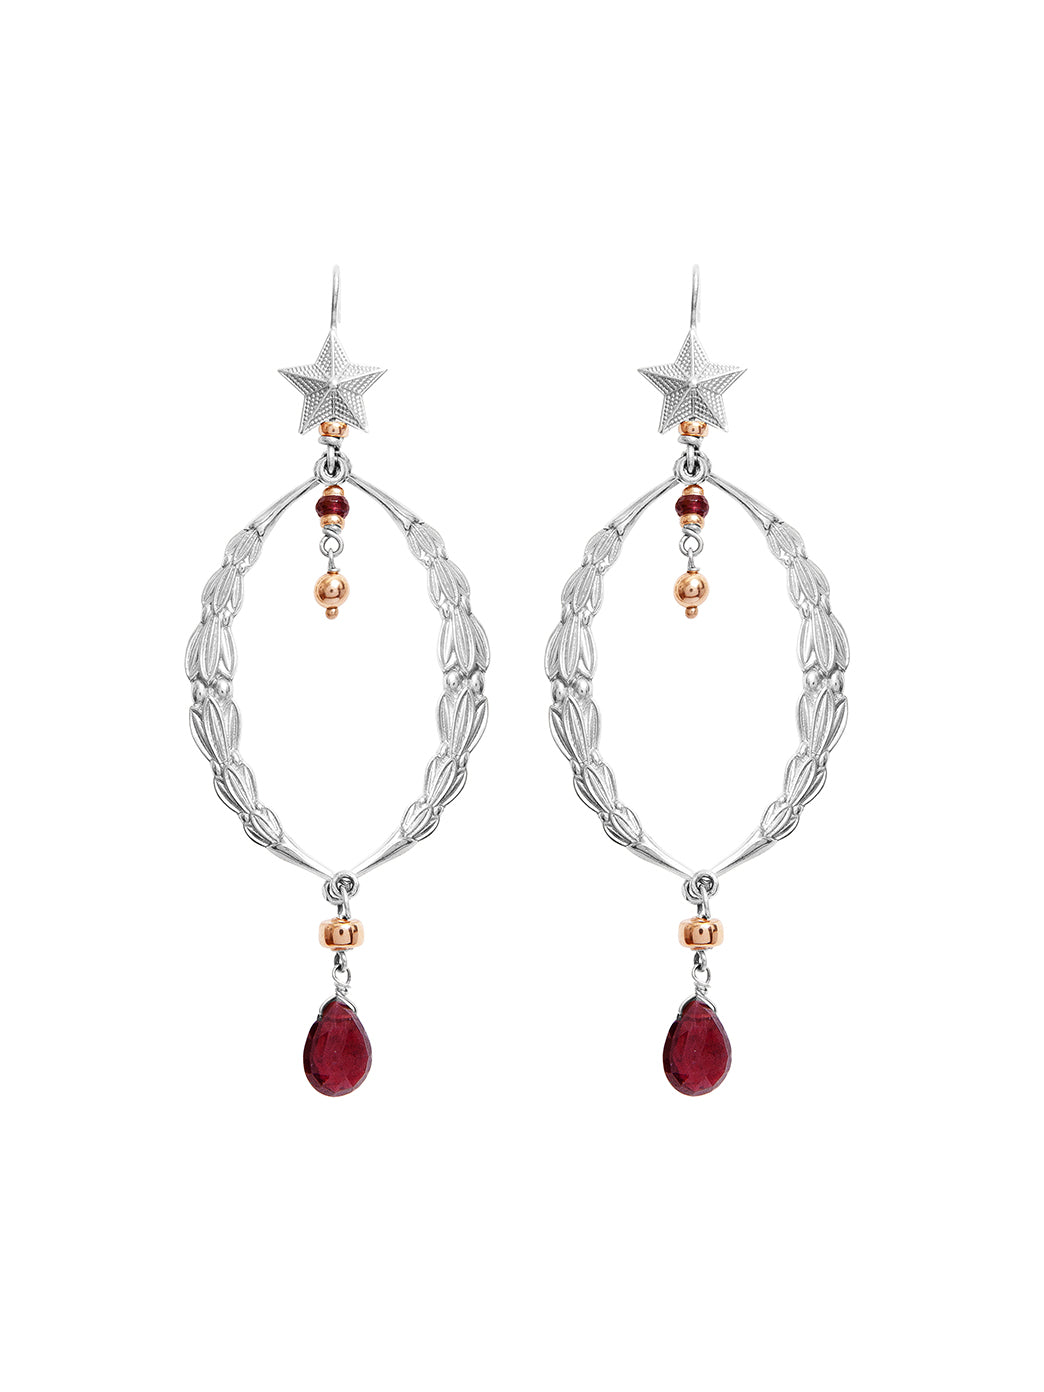 Fiorina Jewellery Magnificence Earrings